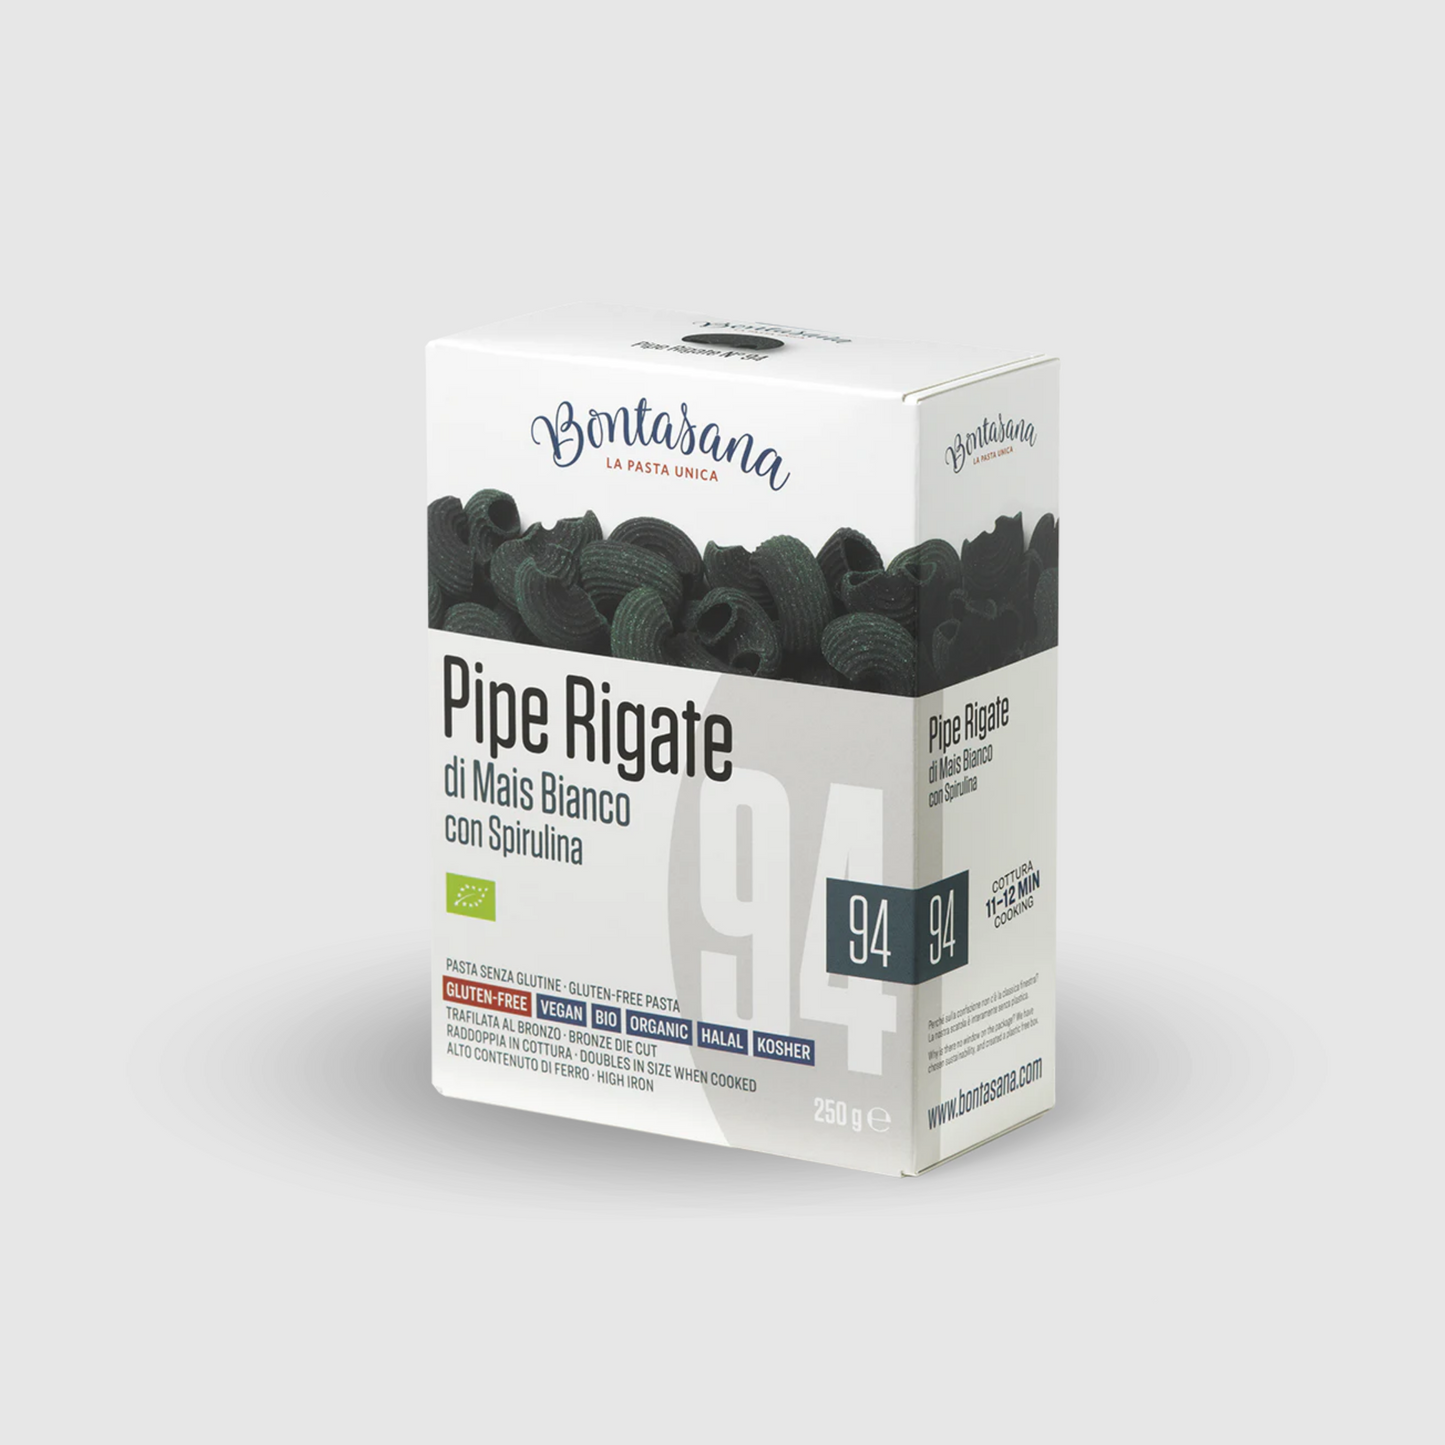 Pipe Rigate n 94 White Corn and Spirulina